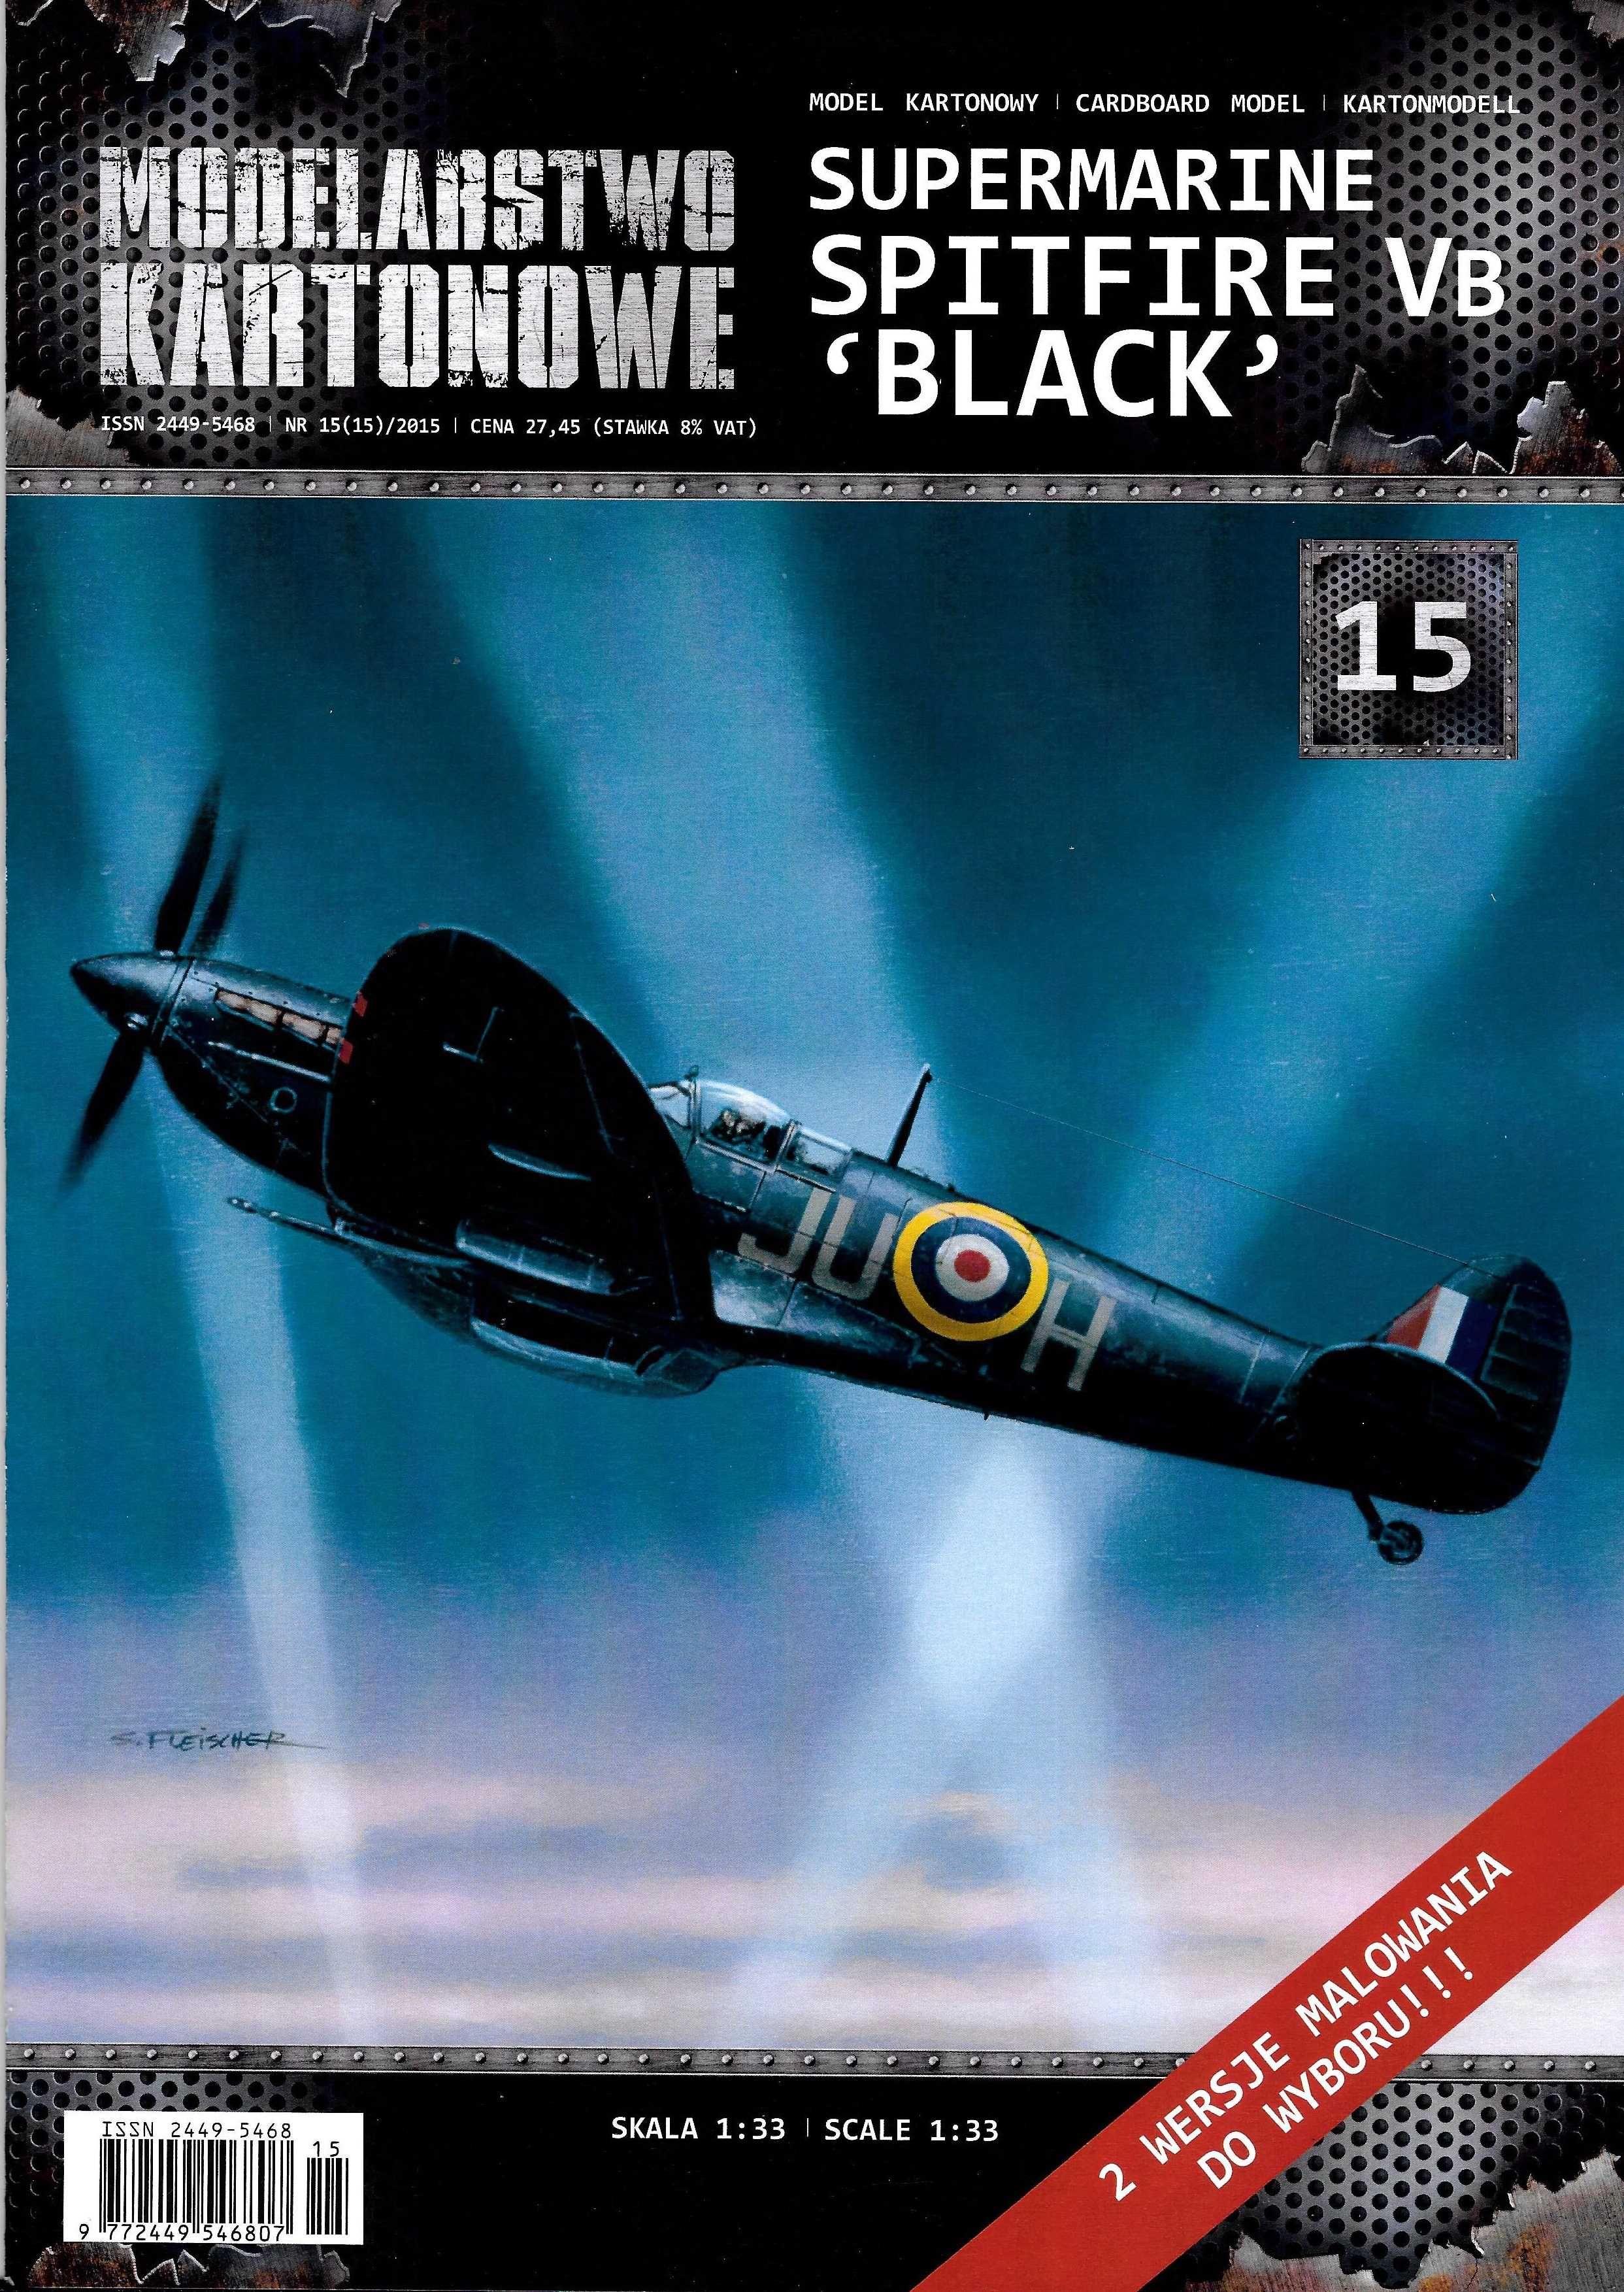 MK 15 Spitfire VB Black Modelarstwo Kartonowe modelarz